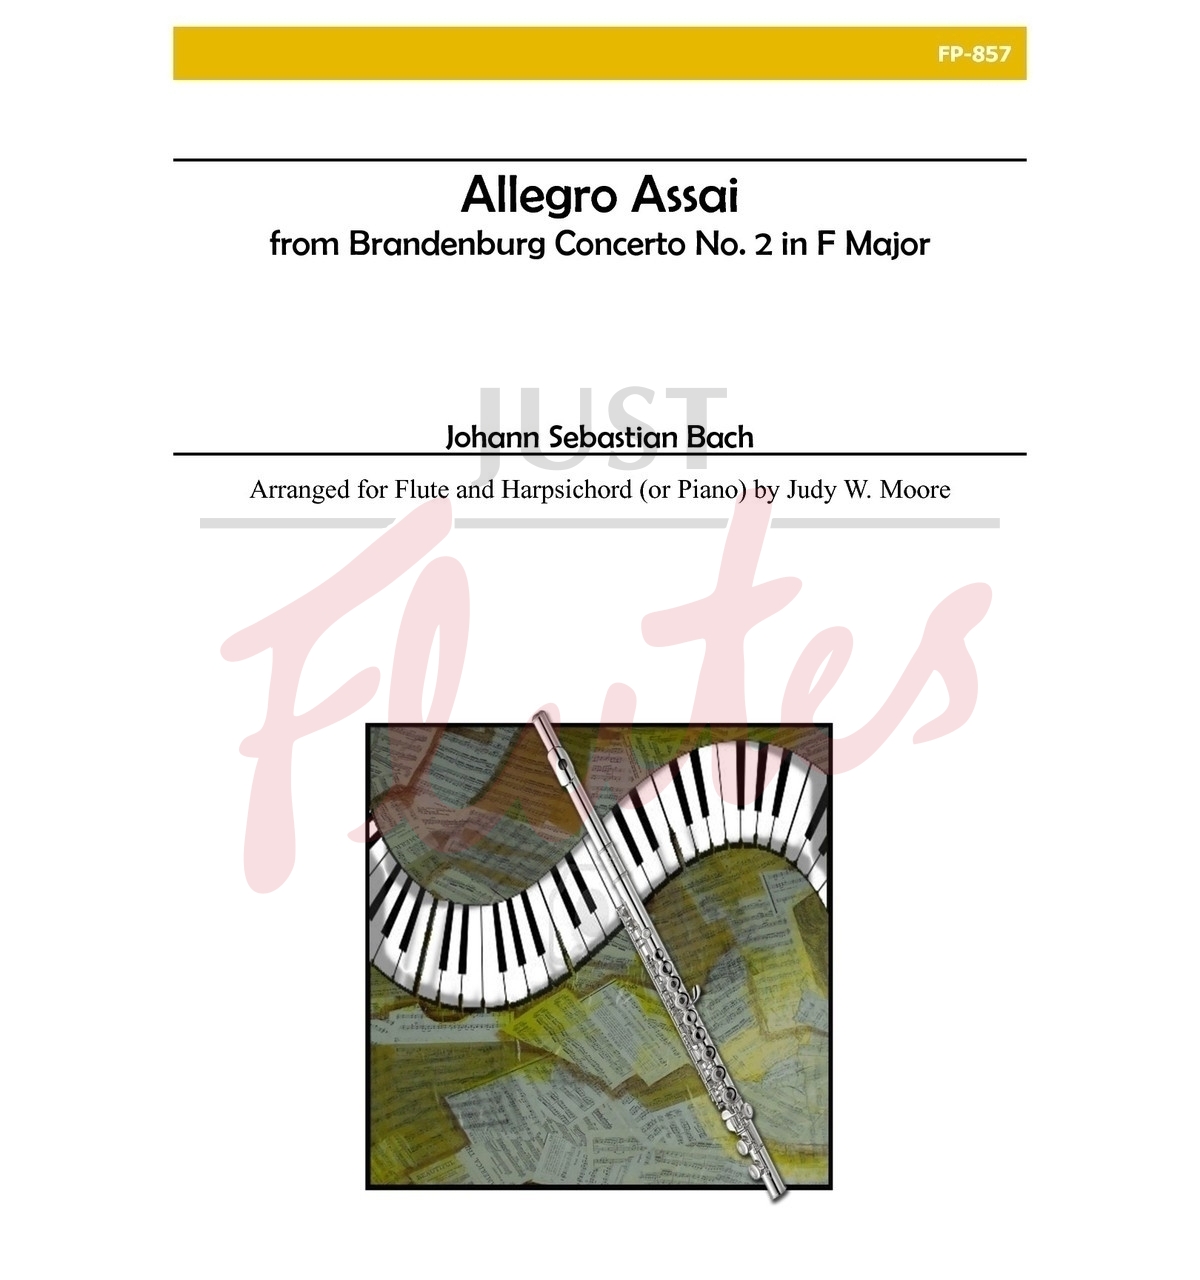 Allegro Assai from Brandenburg Concerto No. 2 in F major for Flute and Piano